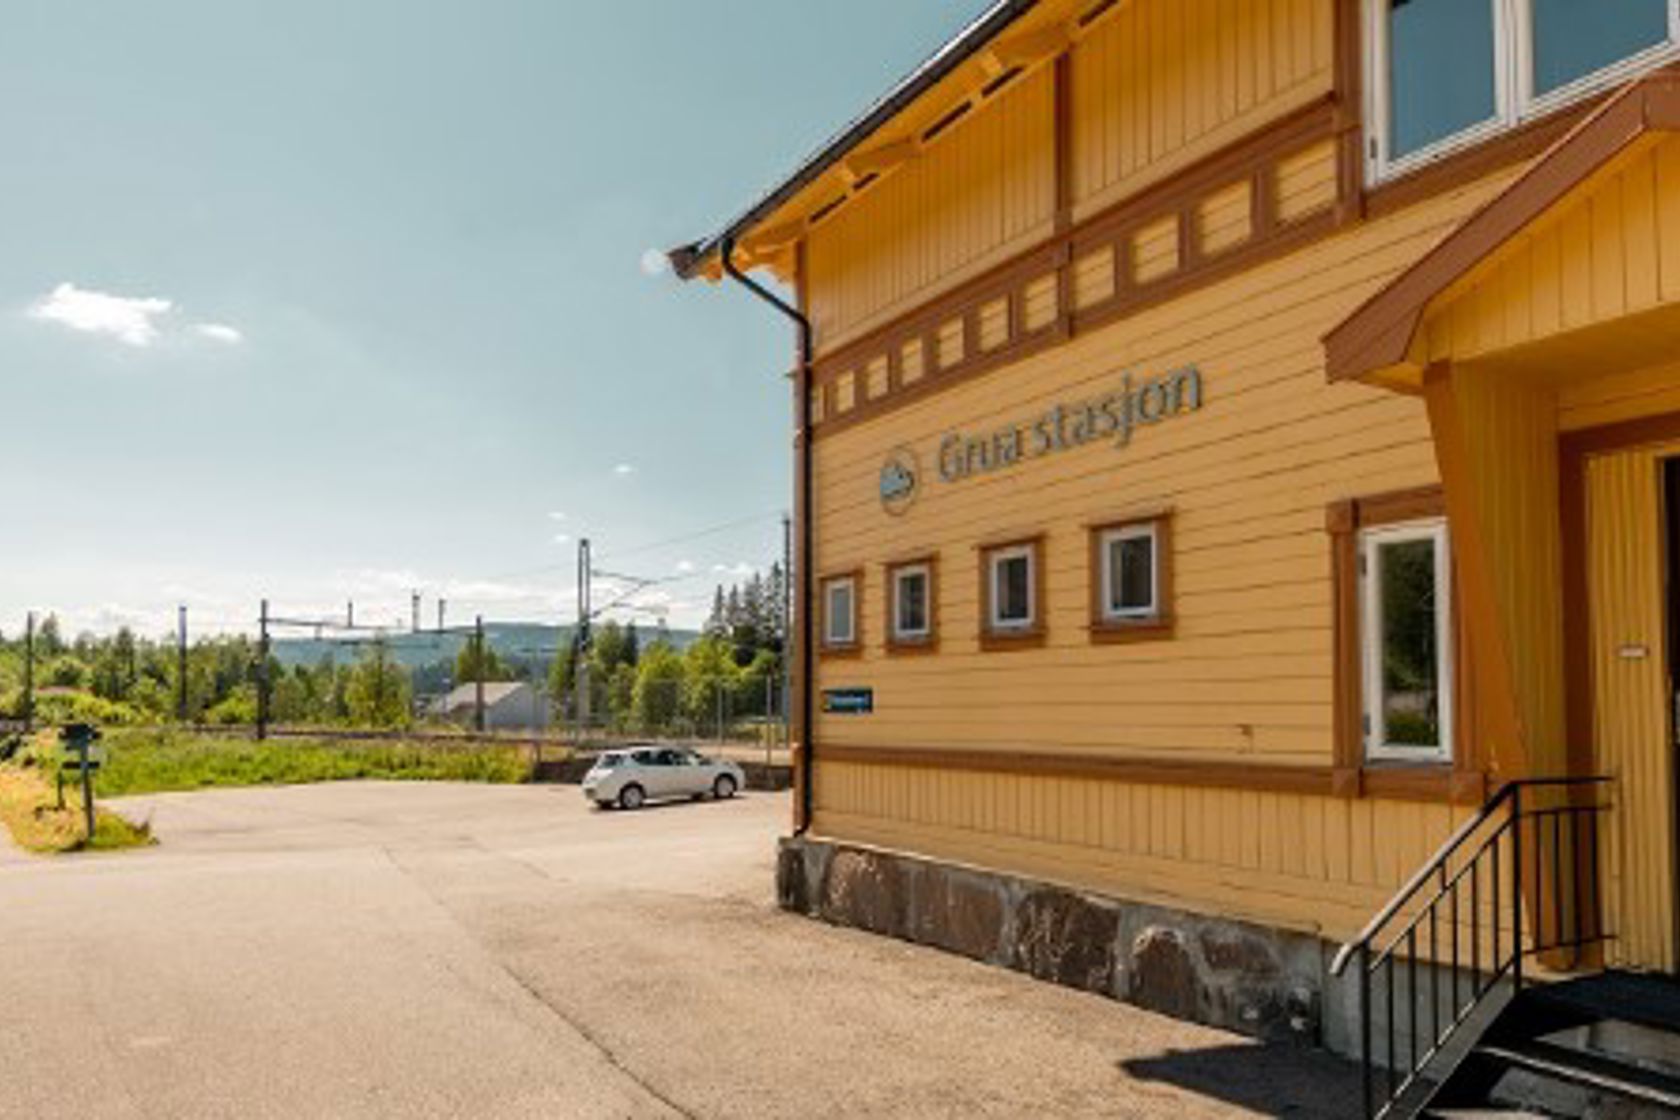 Exterior view of Grua station